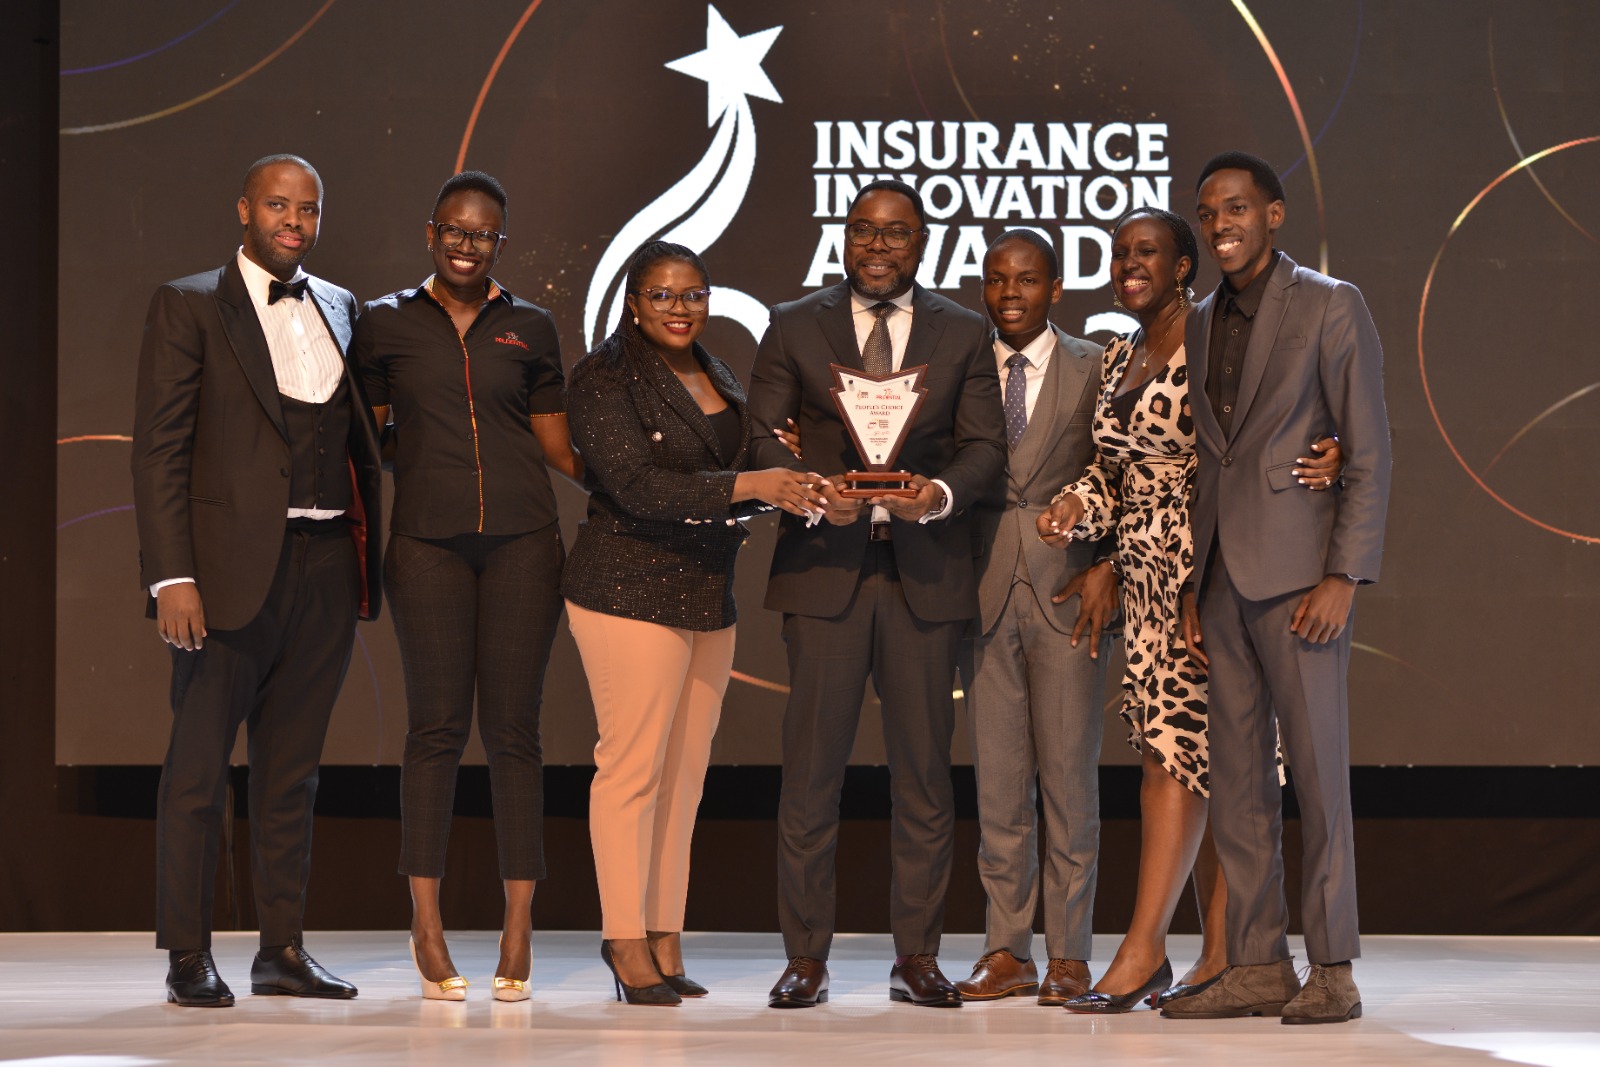 Prudential Uganda at the Innovation awards